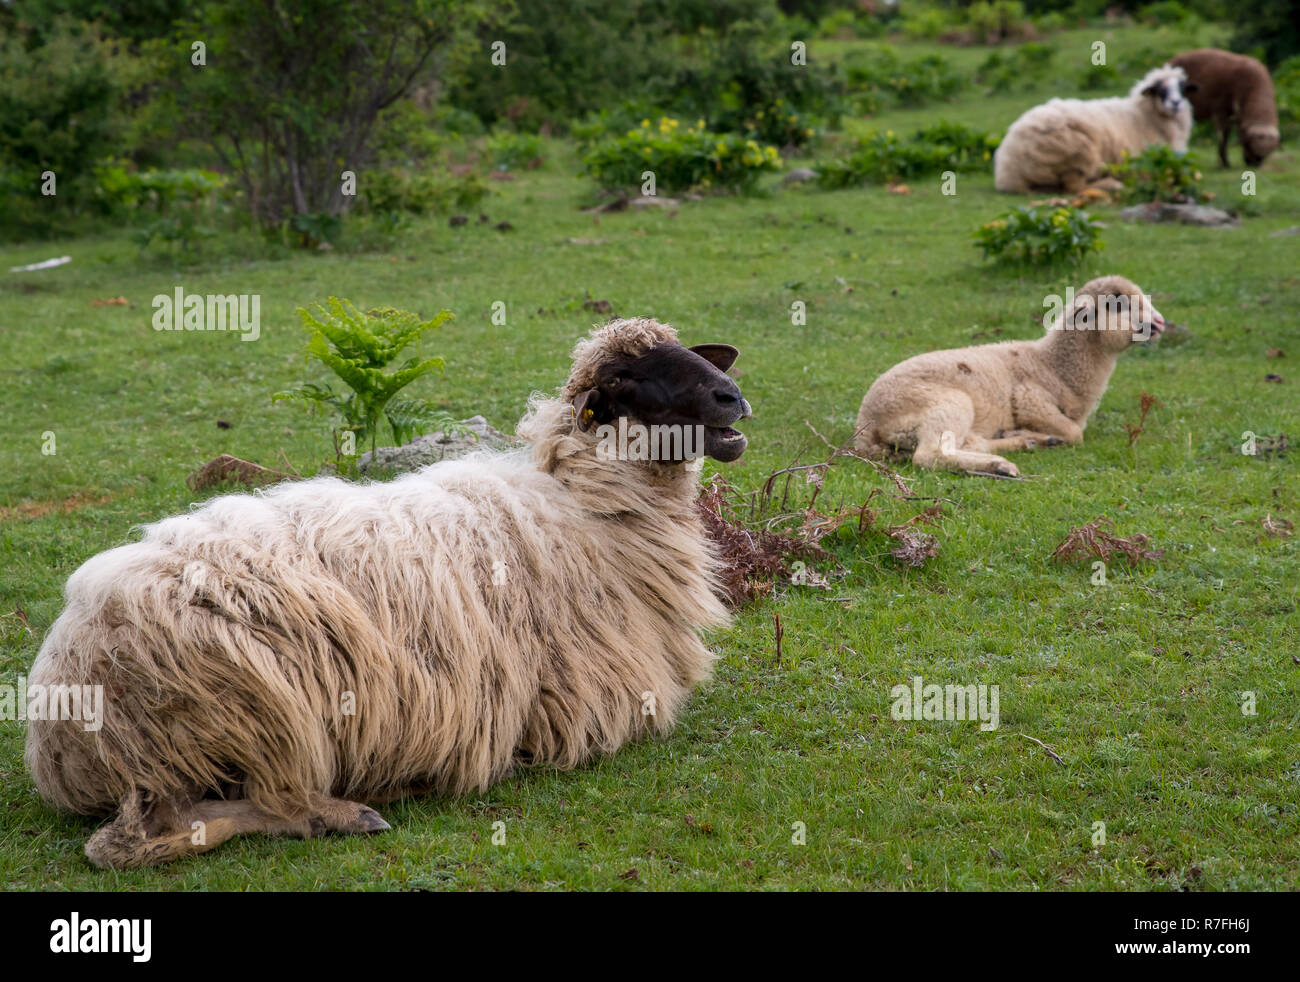 Sheep with long fleece and lambs. Stock Photo